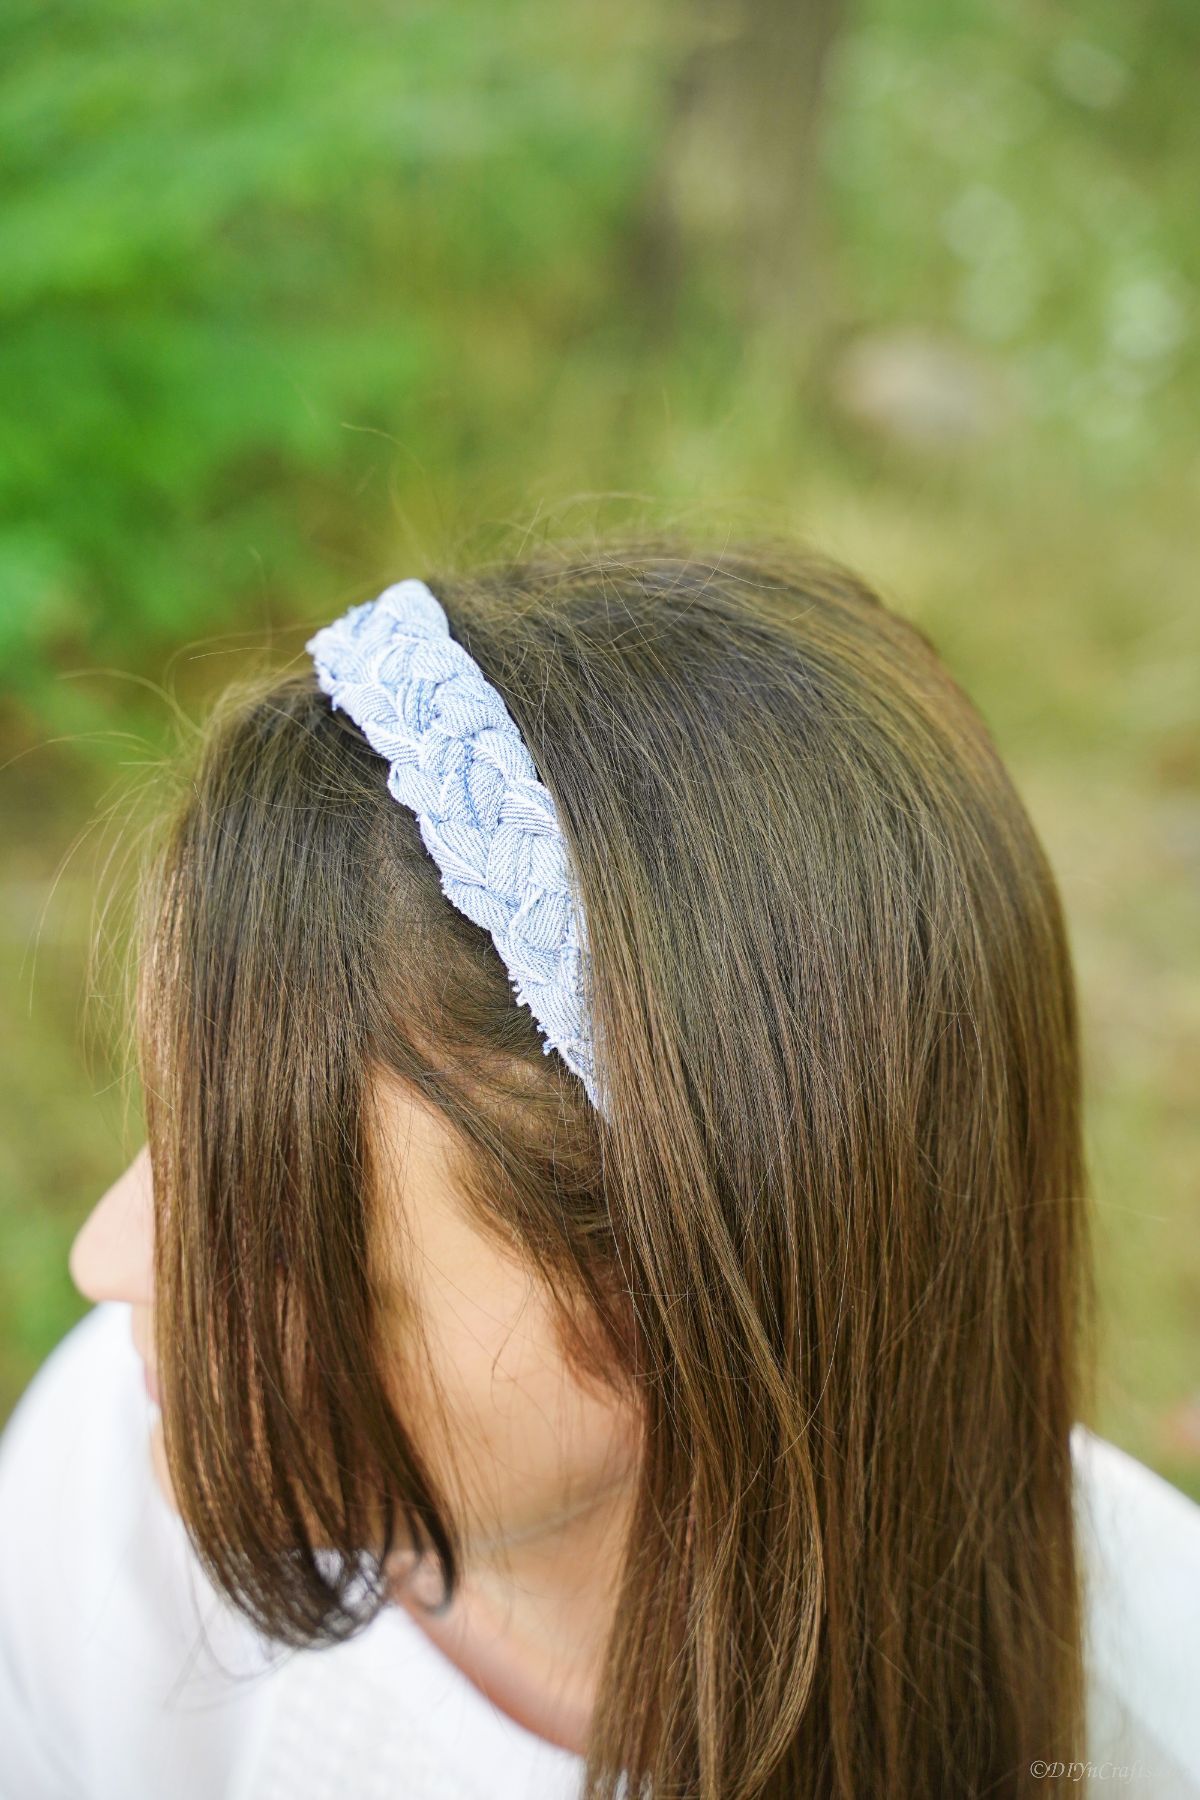 braided light wash denim headband being worn by woman in white shirt